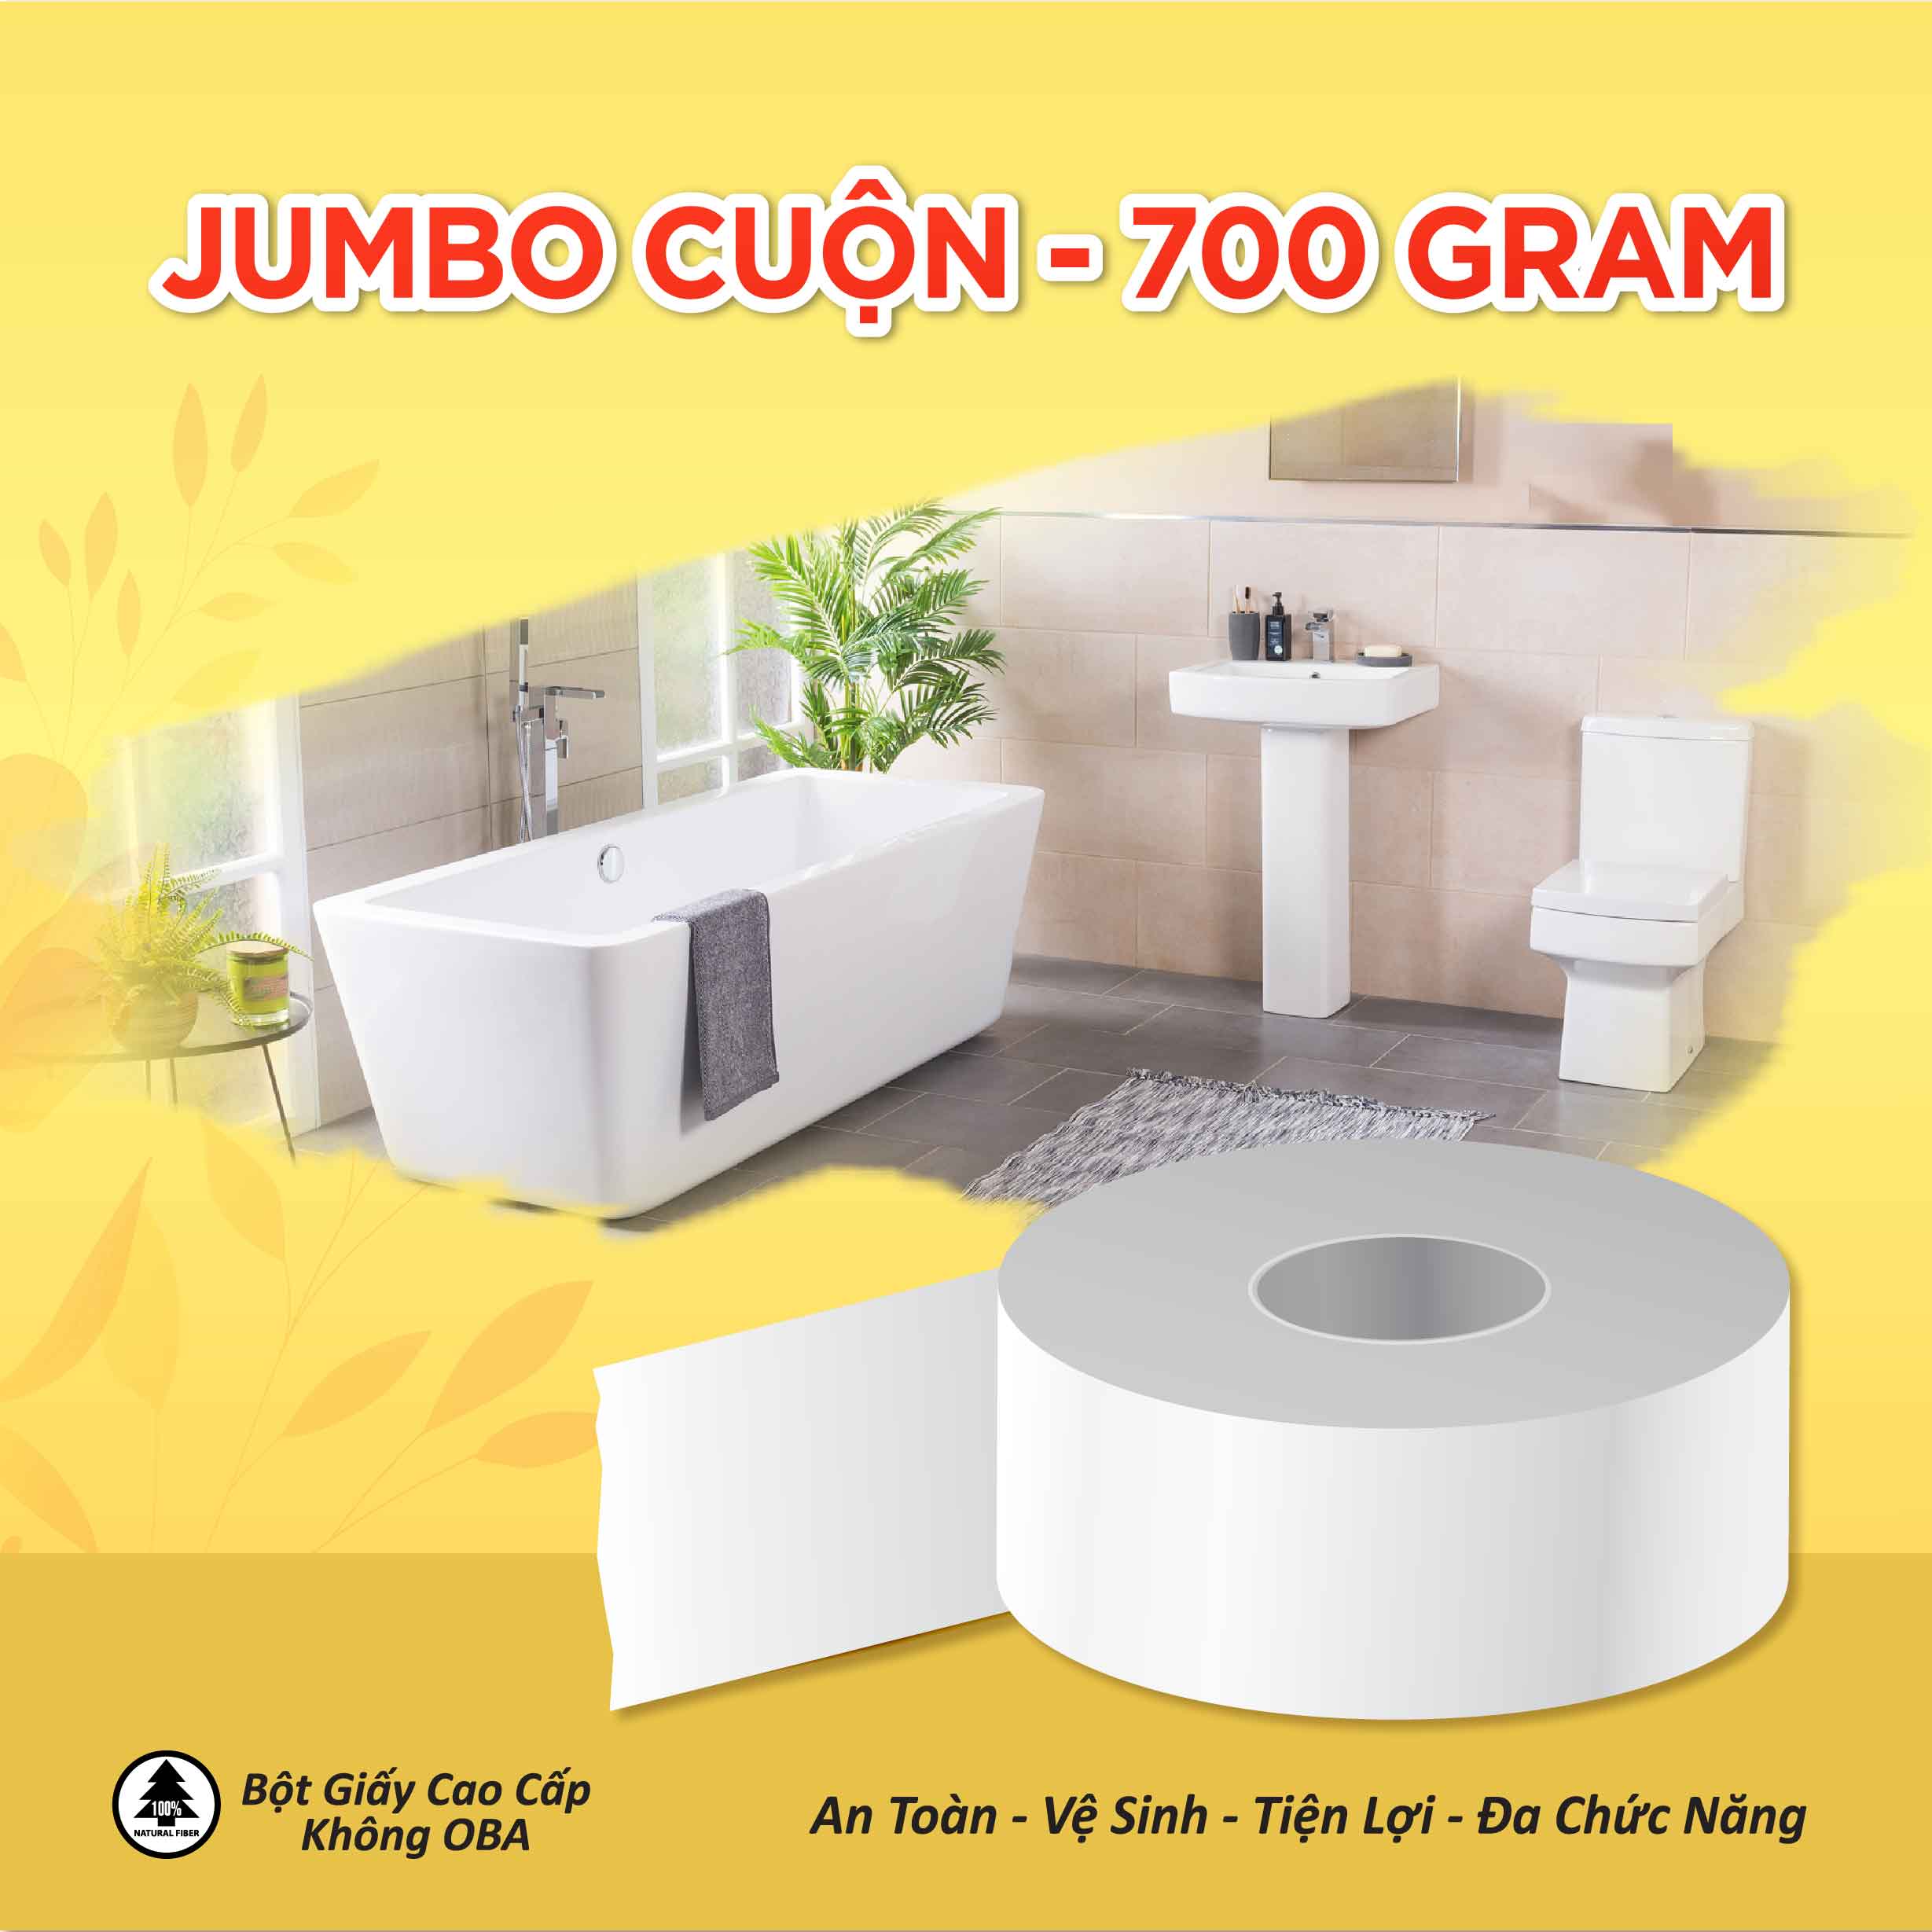 Giấy vệ sinh PREMIER VinaRoll Jumbo 700G - combo 10 cuộn (Giấy vệ sinh cuộn lớn)